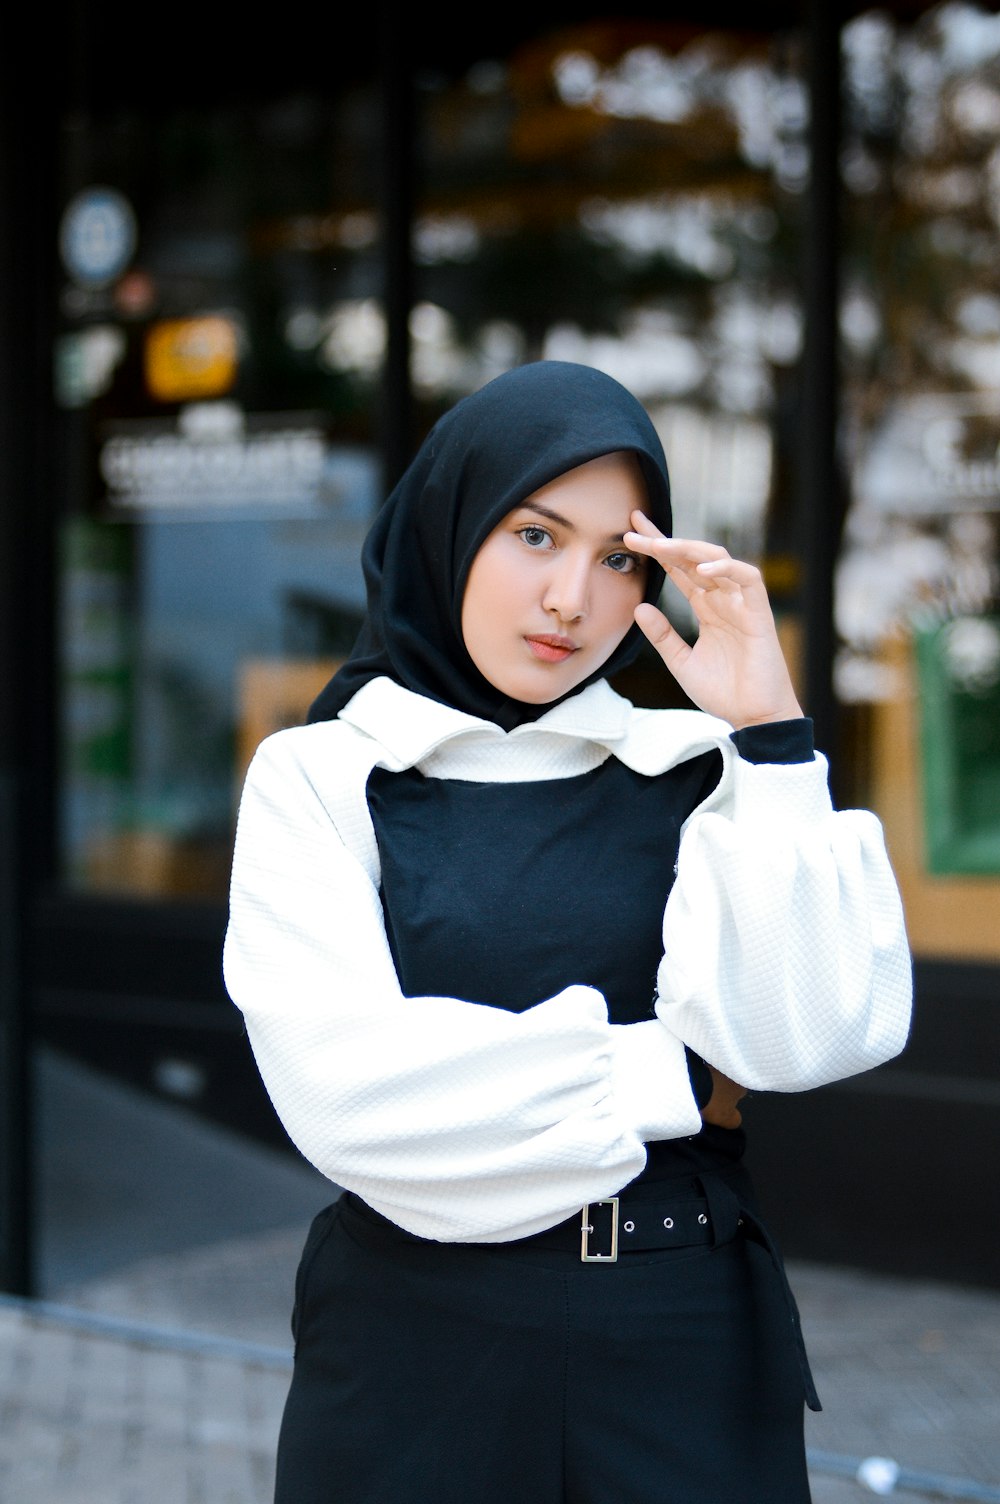 Una donna in un foulard nero